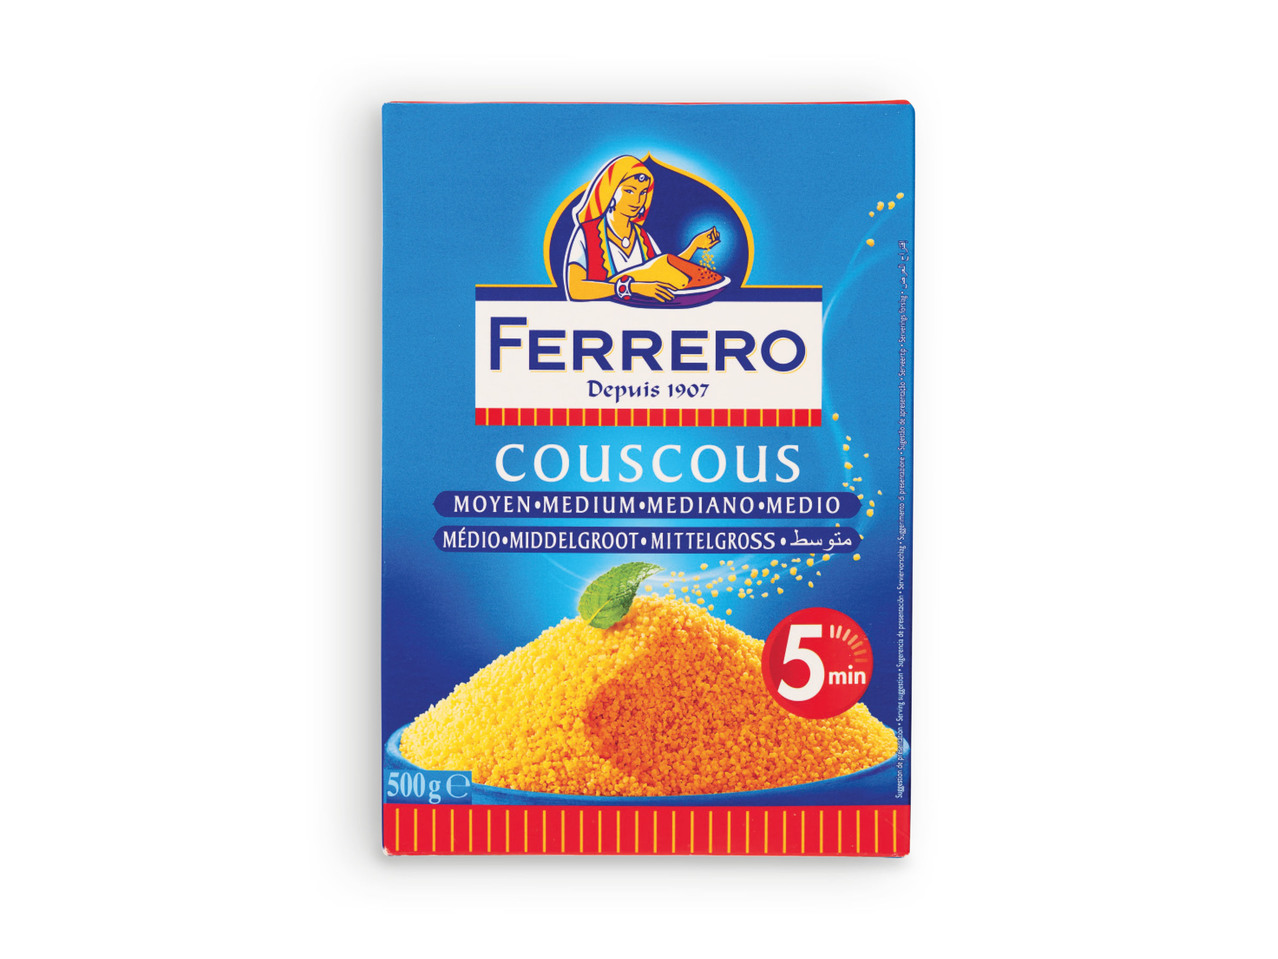 FERRERO(R) Couscous